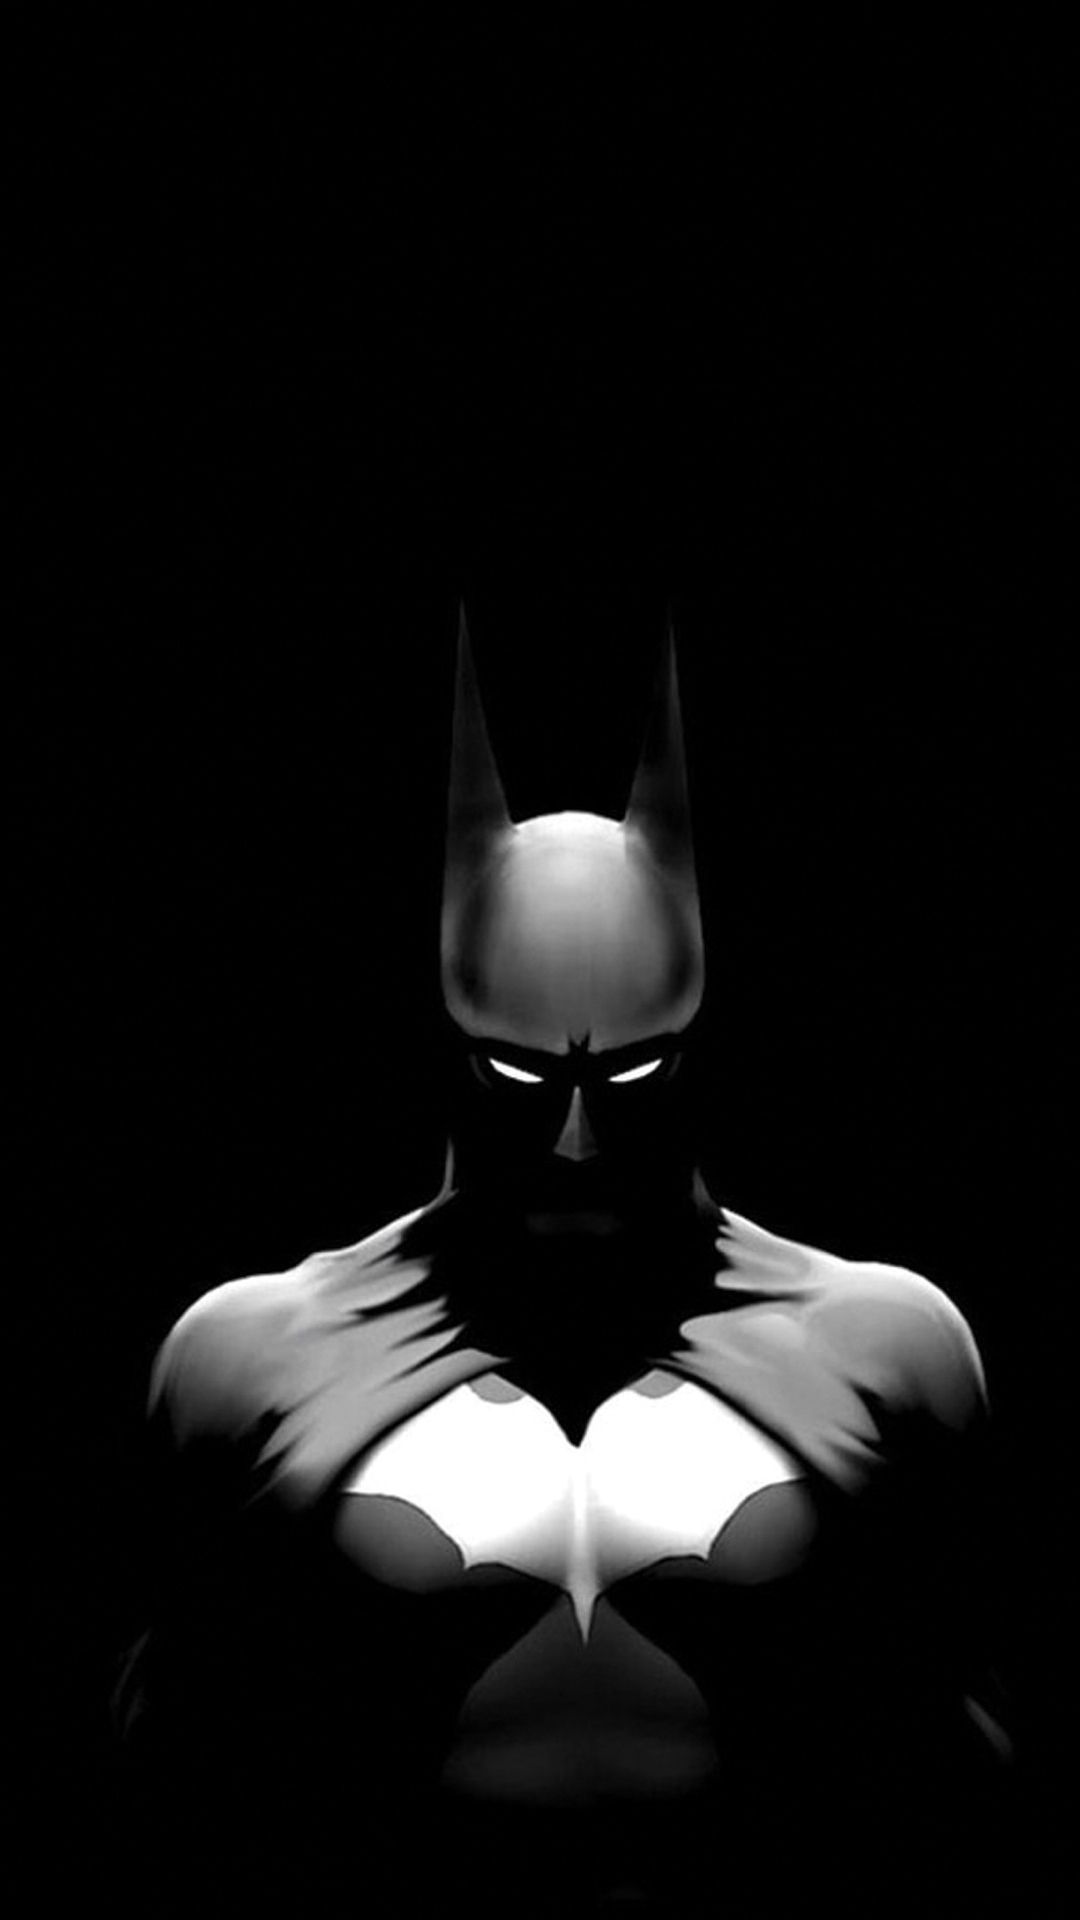  Batman Hintergrundbild 1080x1920. Most Popular Dark Wallpaper For Android FULL HD 1920×1080 For PC Desktop. Batman wallpaper iphone, Batman wallpaper, Batman dark